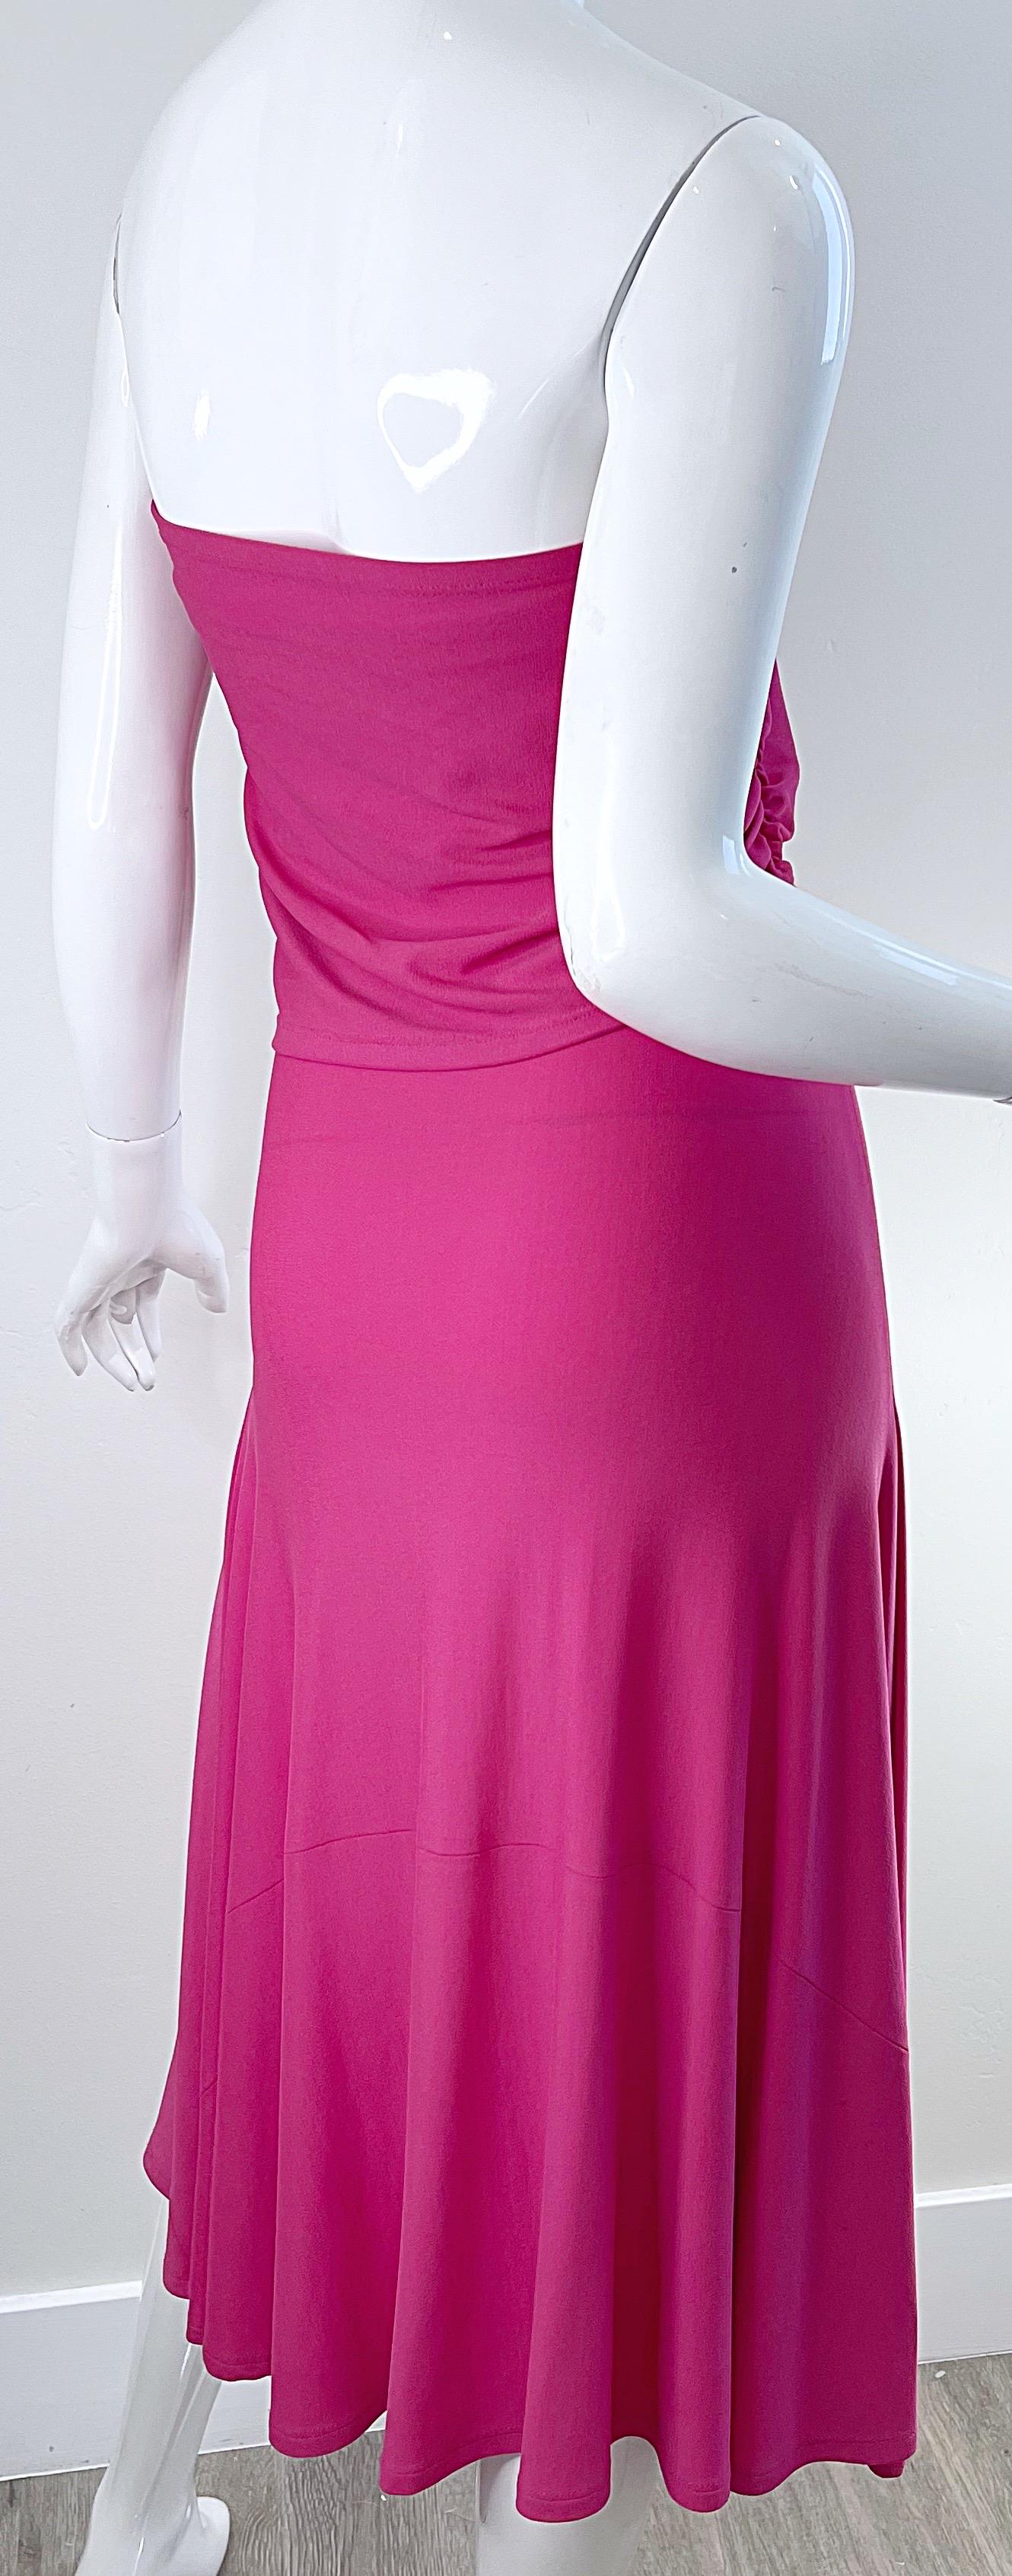 NWT Donna Karan Resort 2016 Hot Pink Size Medium Strapless Tube Dress For Sale 9